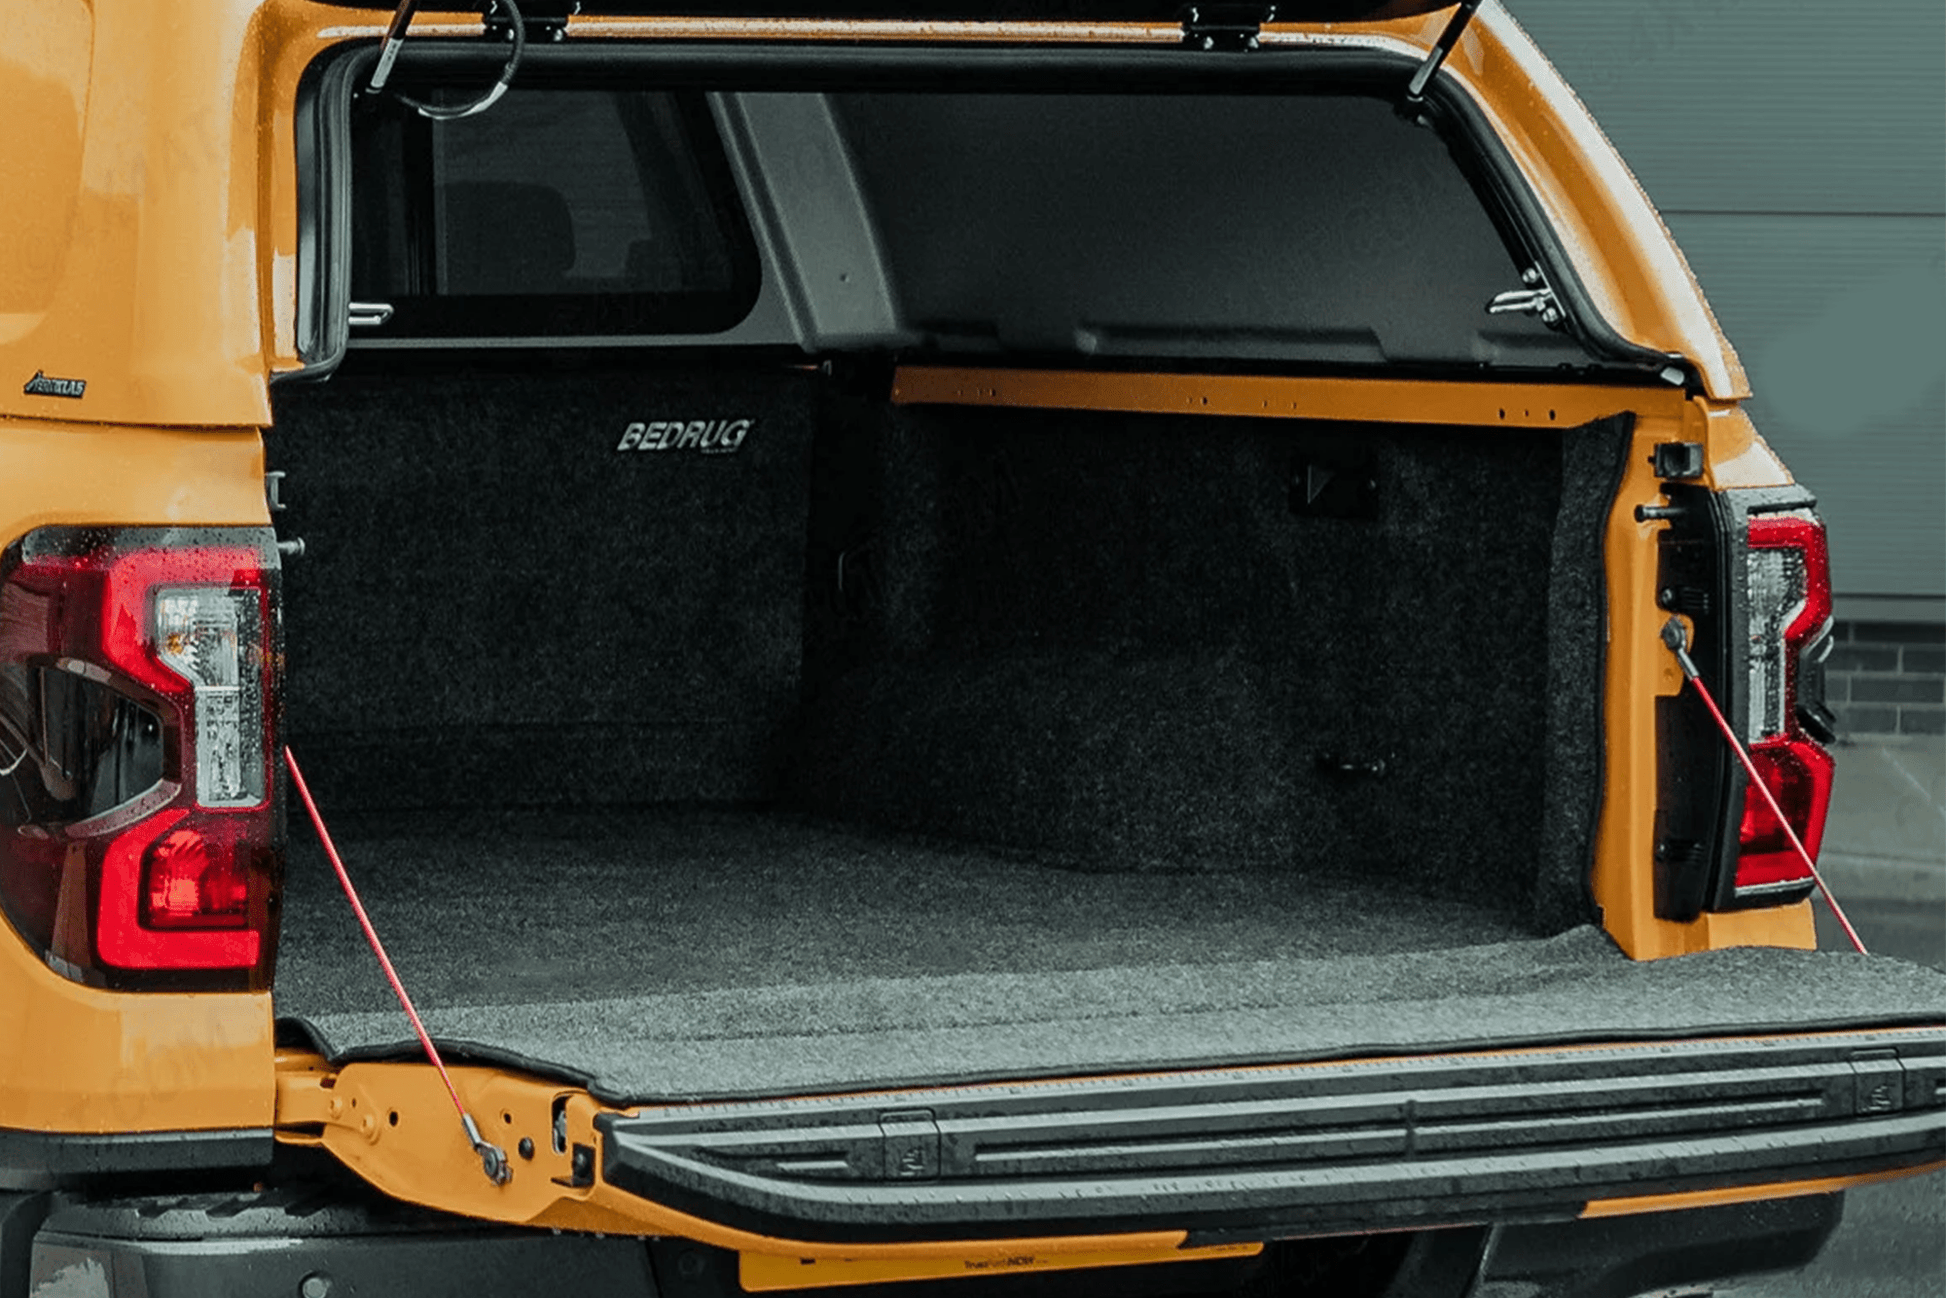 Ford Ranger 2023+ Bedrug Heavy-Duty Carpet Load Bed Liner - Next-Gen Ranger UK